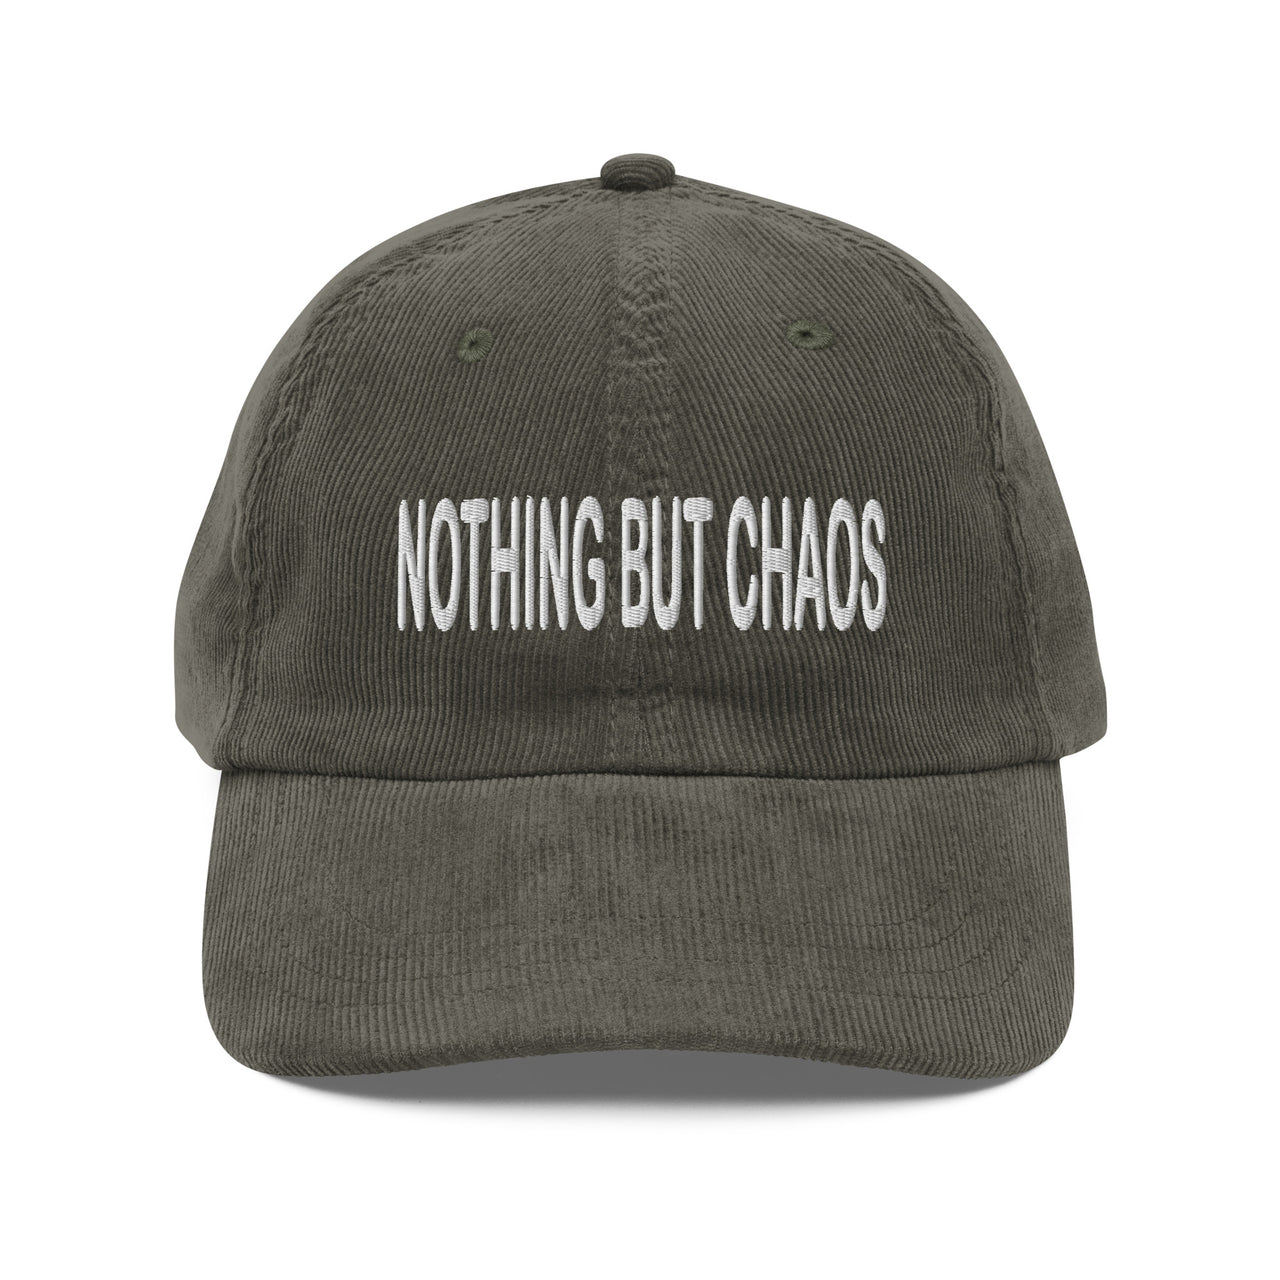 Vintage corduroy cap